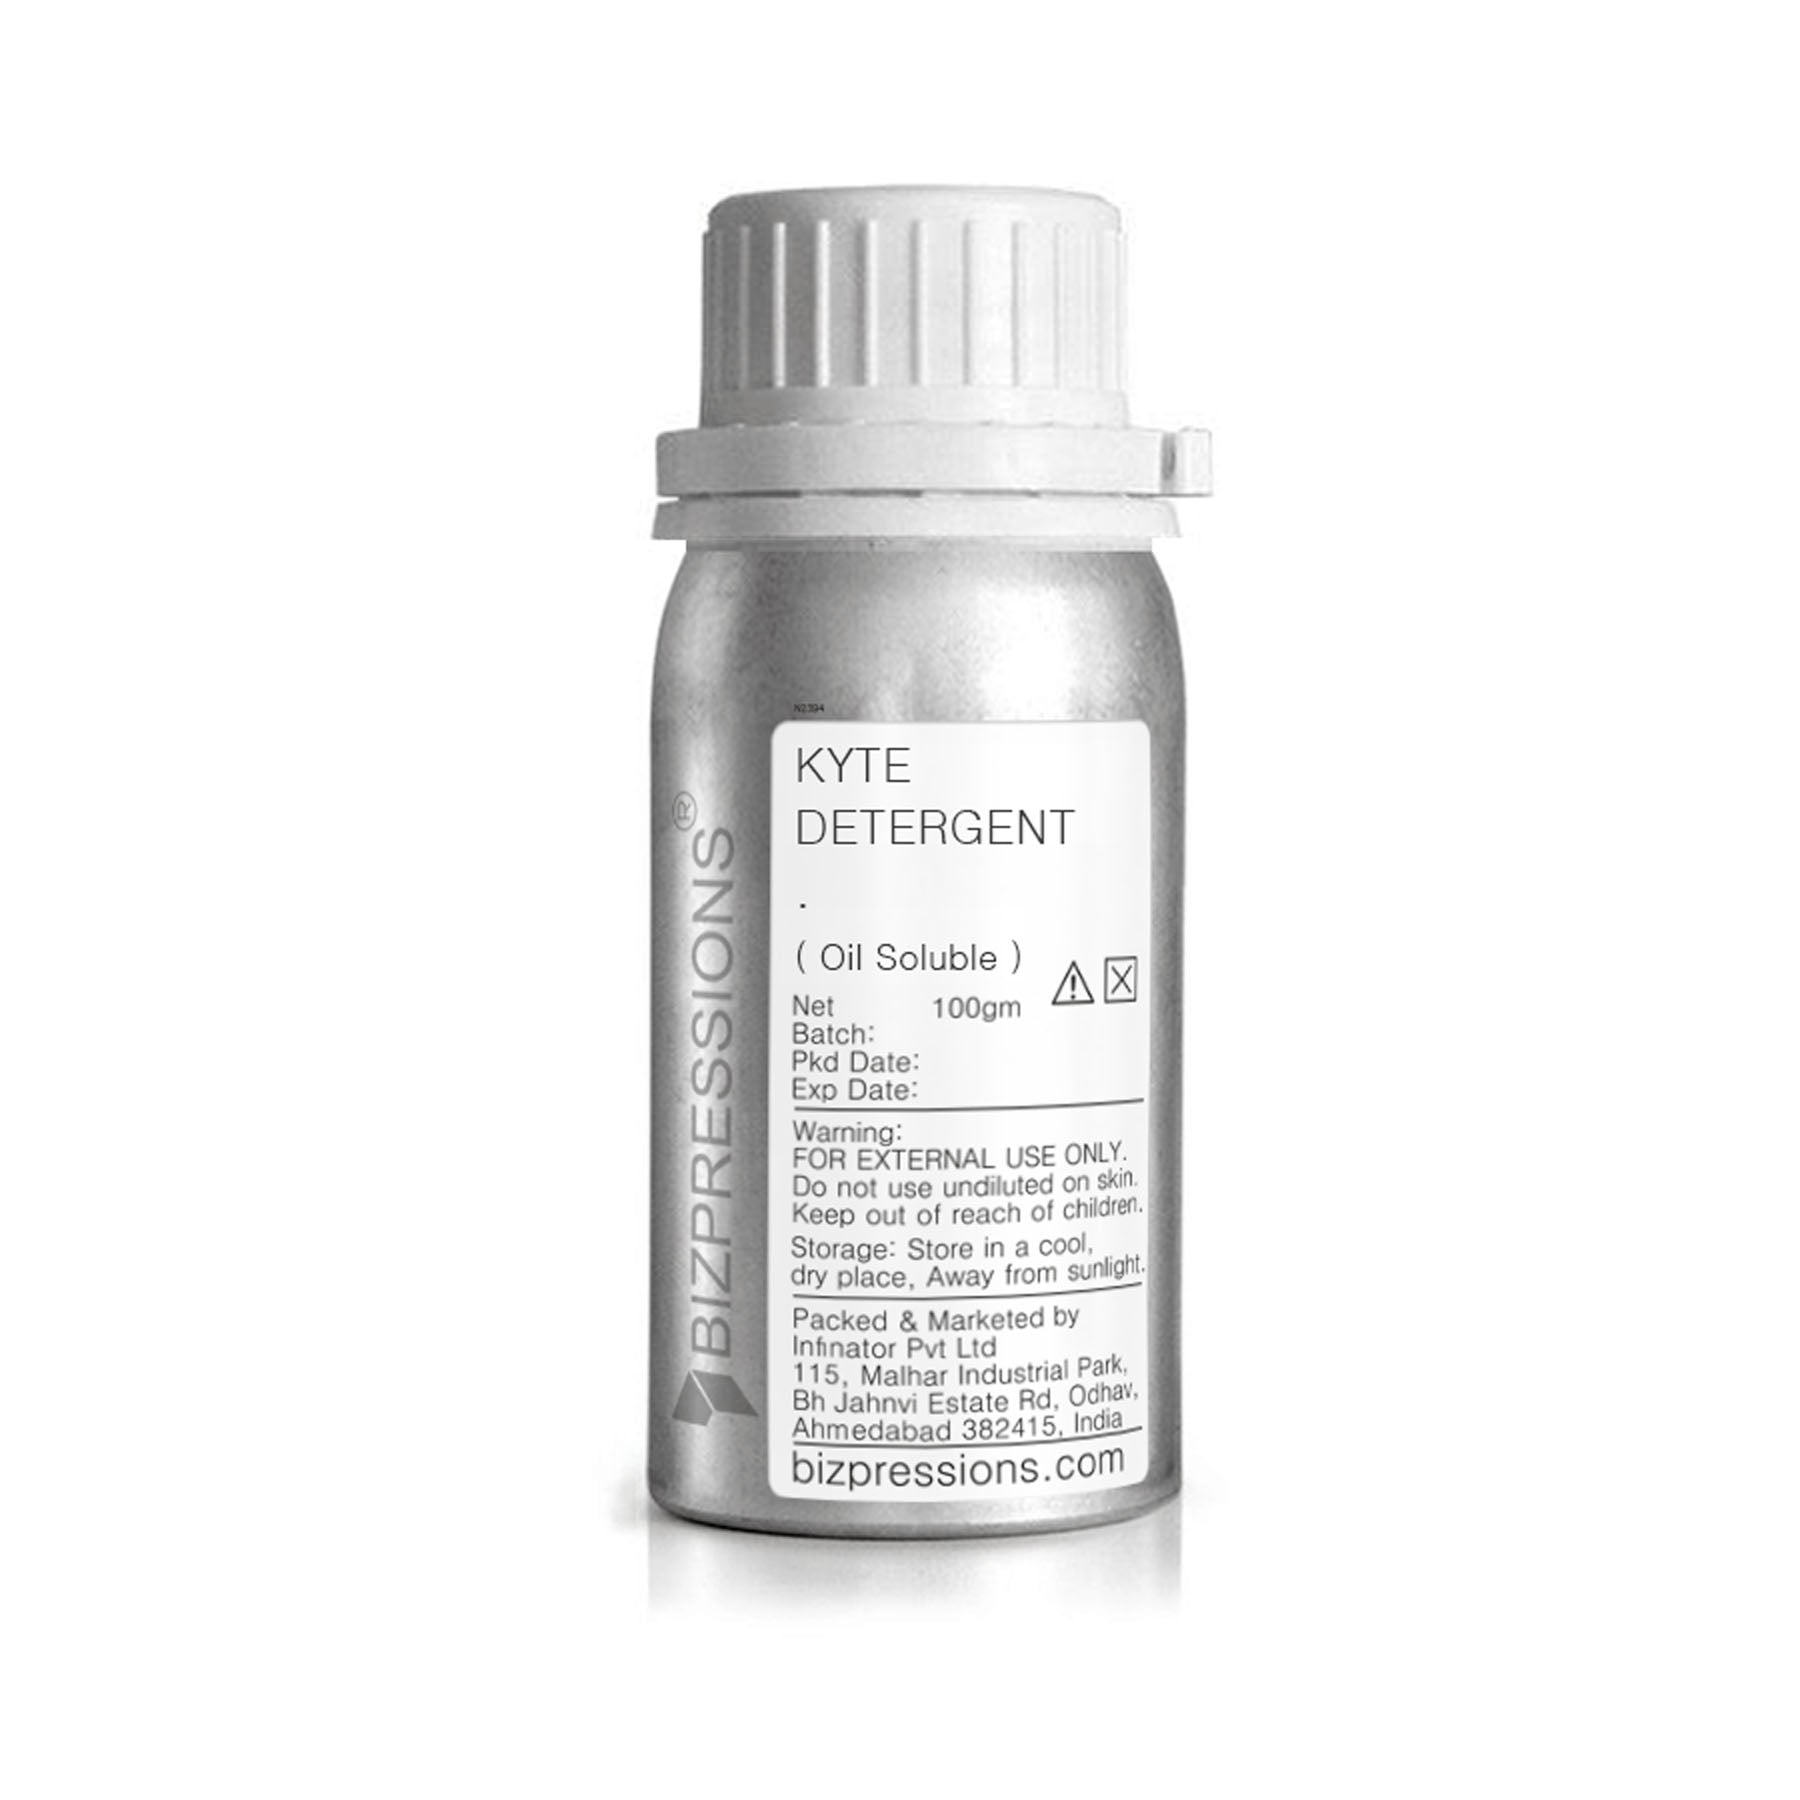 KYTE DETERGENT - Fragrance ( Oil Soluble ) - 100 gm